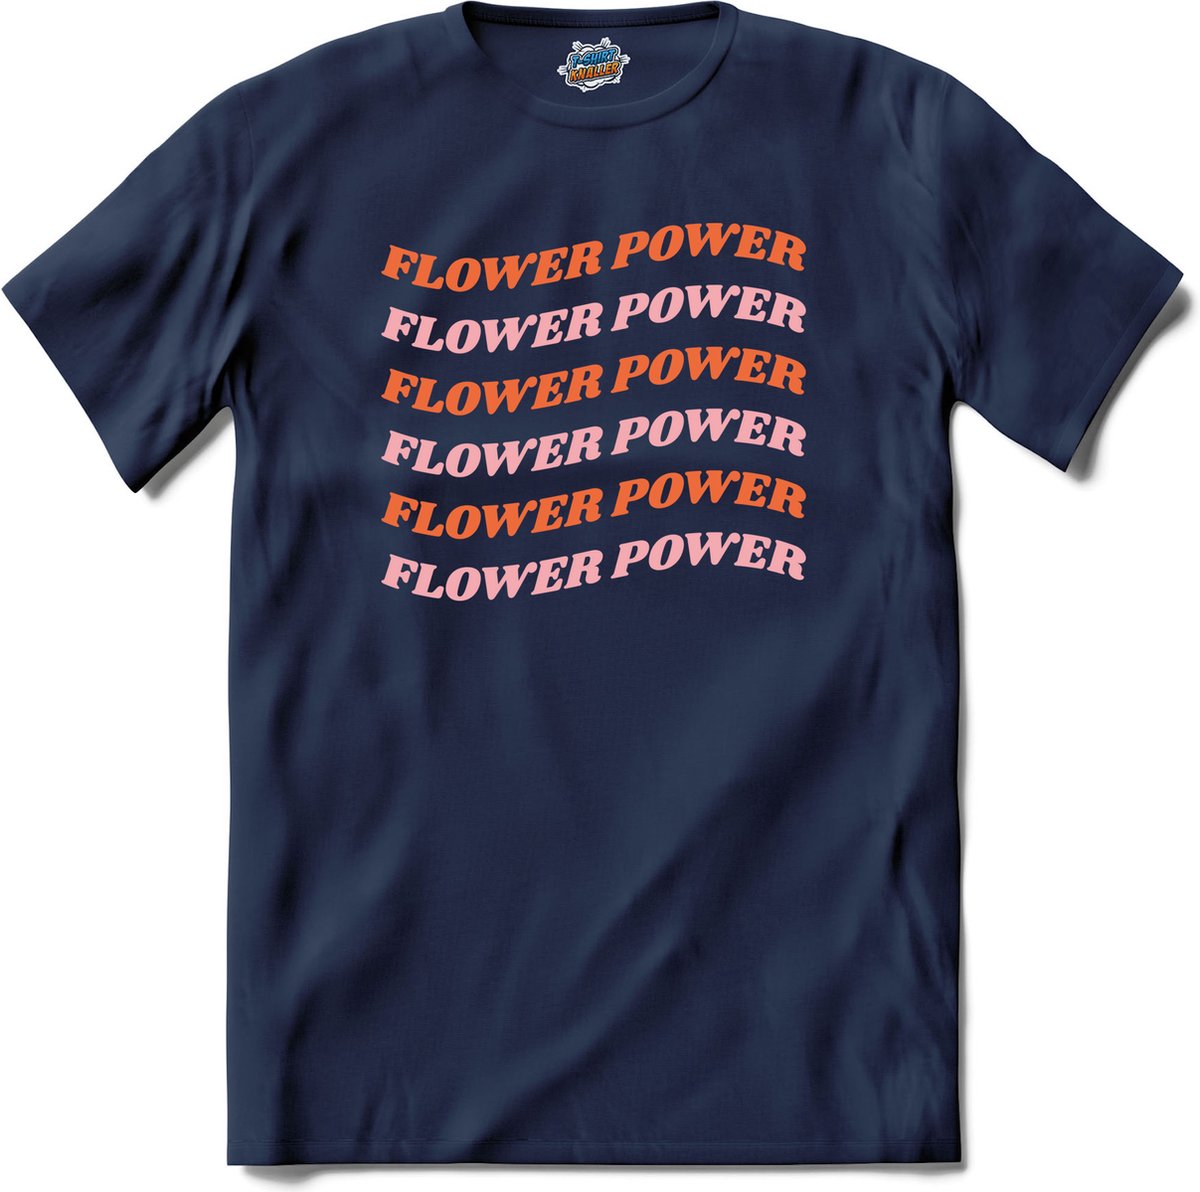 Flower power - T-Shirt - Meisjes - Navy Blue - Maat 12 jaar